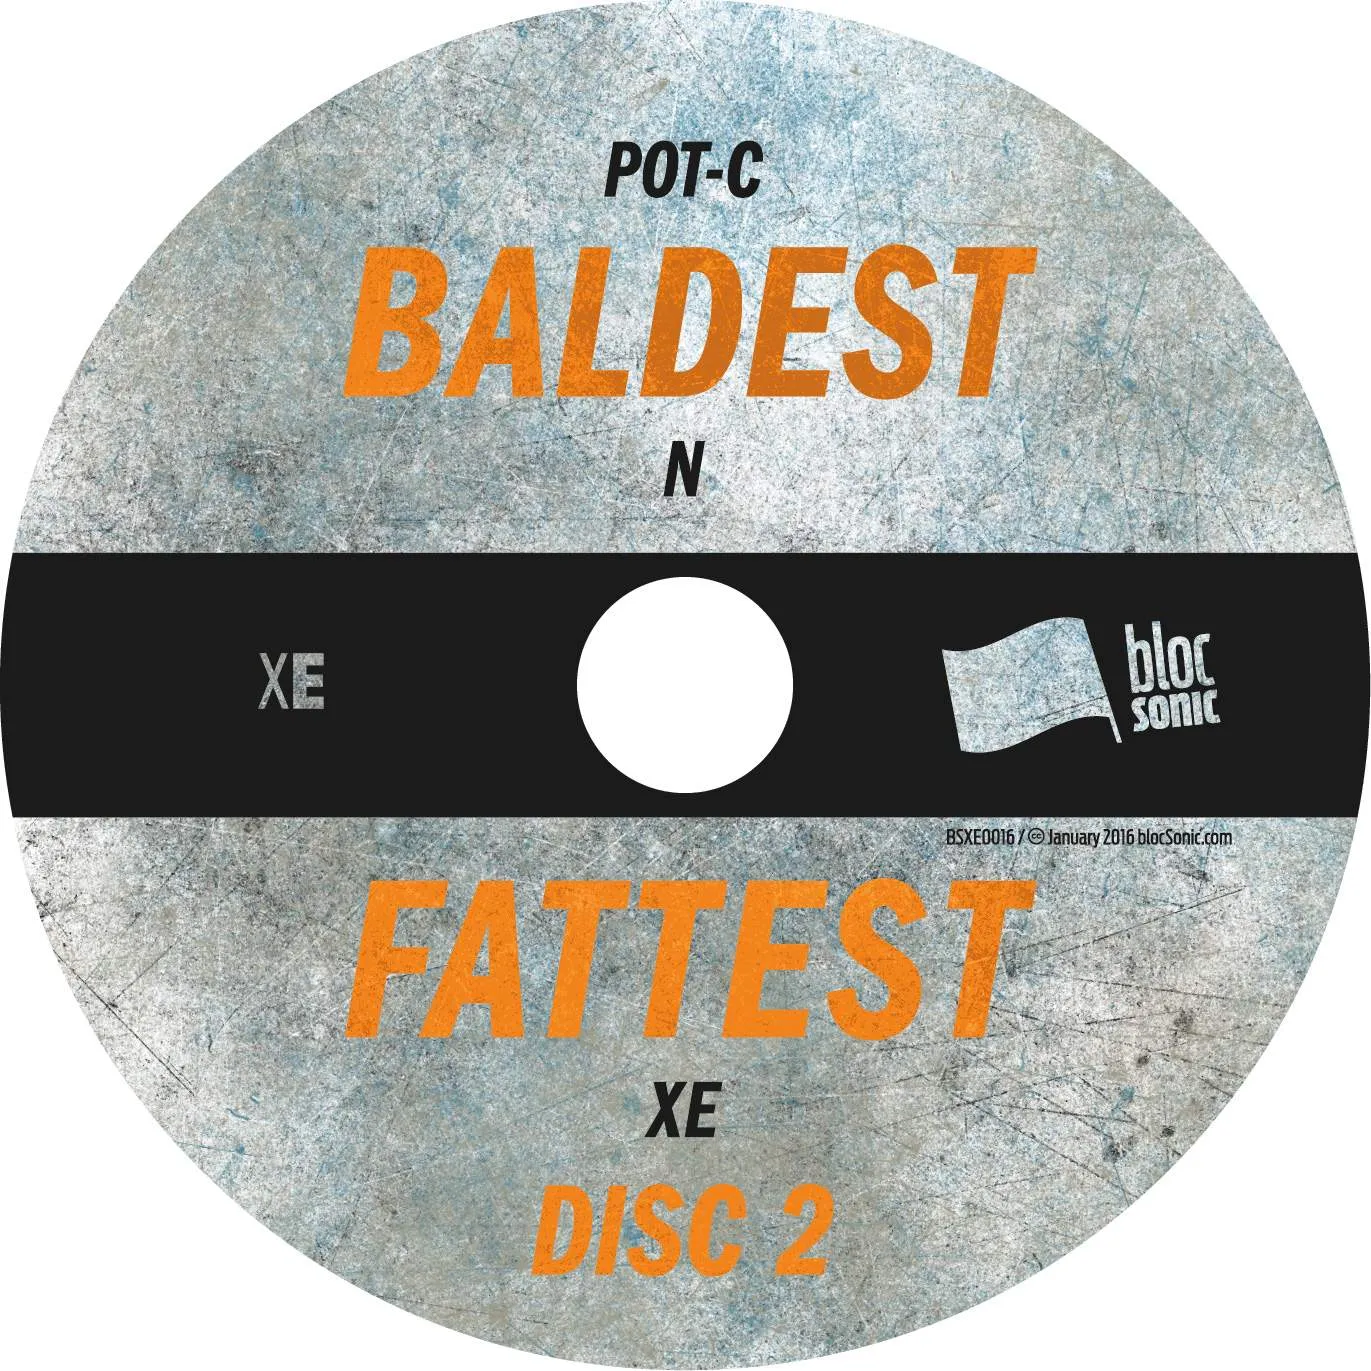 Album disc for “Baldest N Fattest XE” by Pot-C